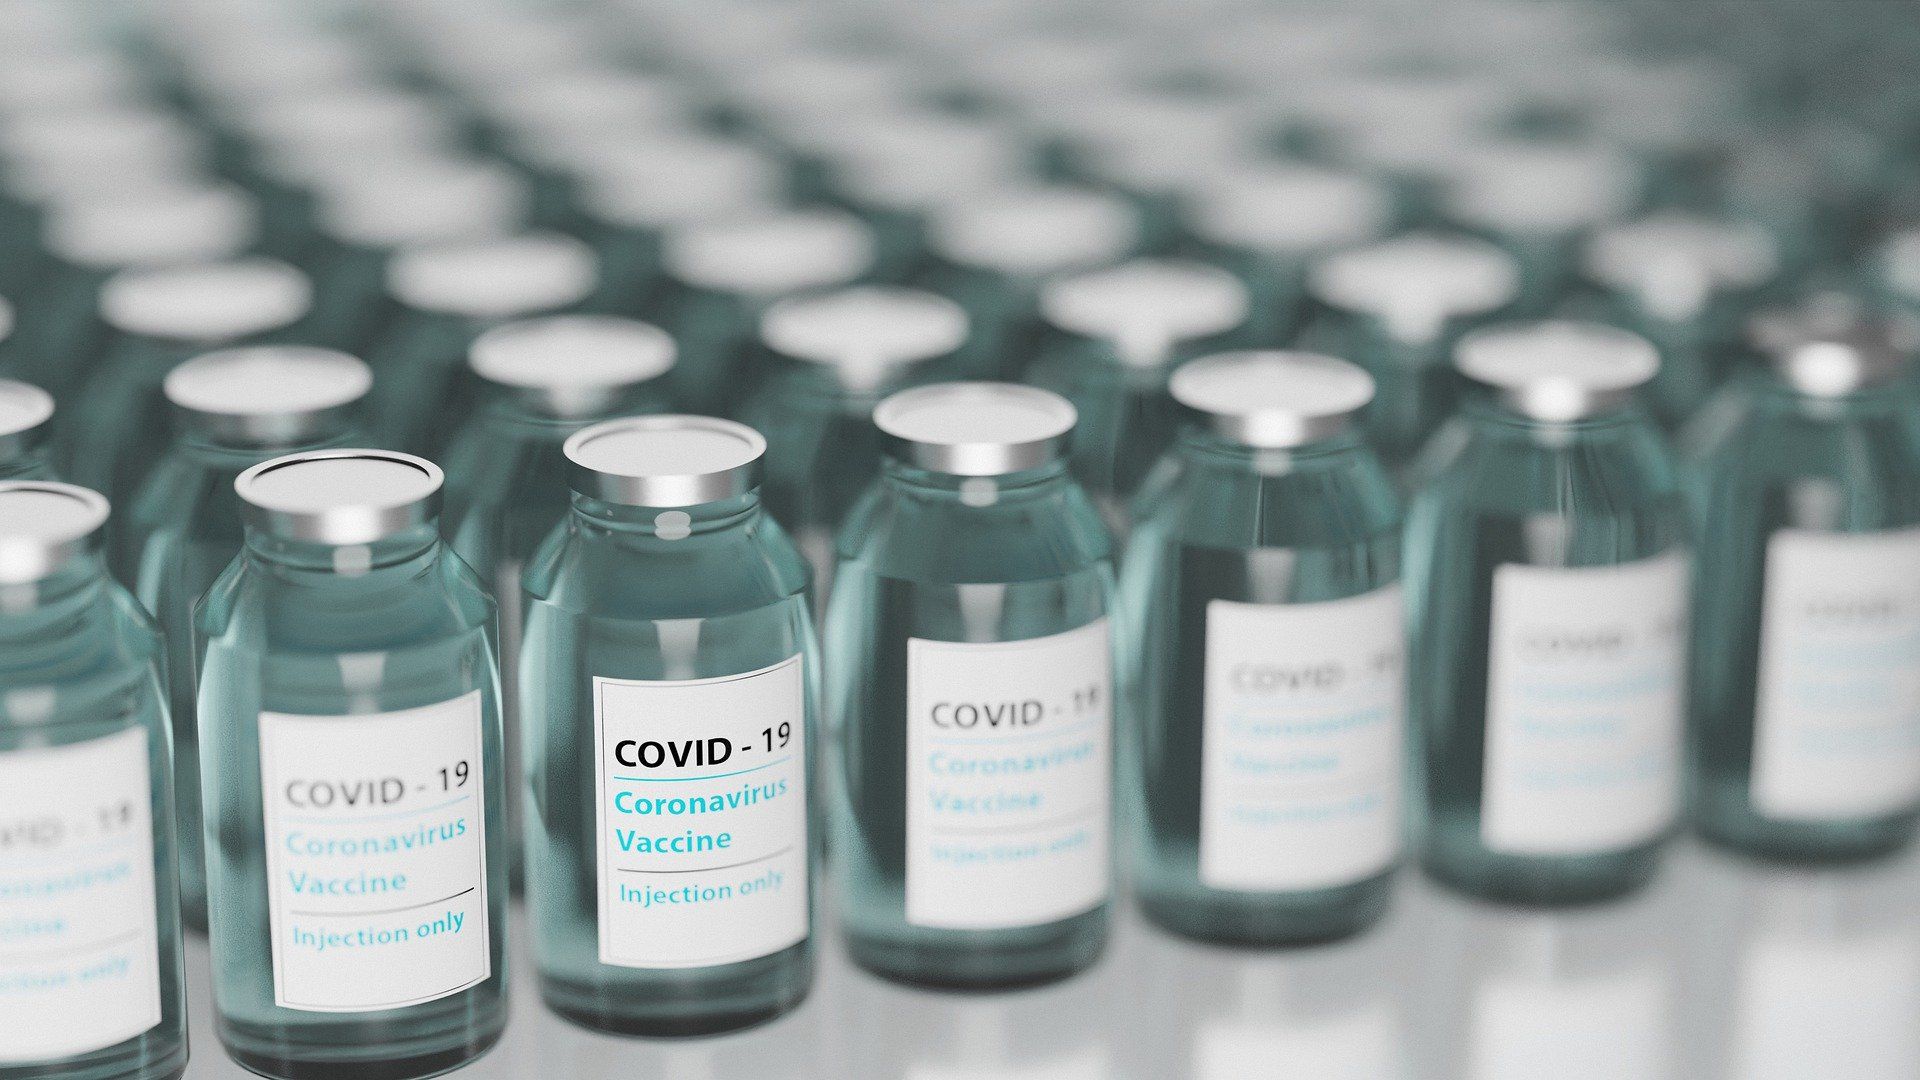 Jordan to vaccinate children above 12 with Pfizer COVID vaccine